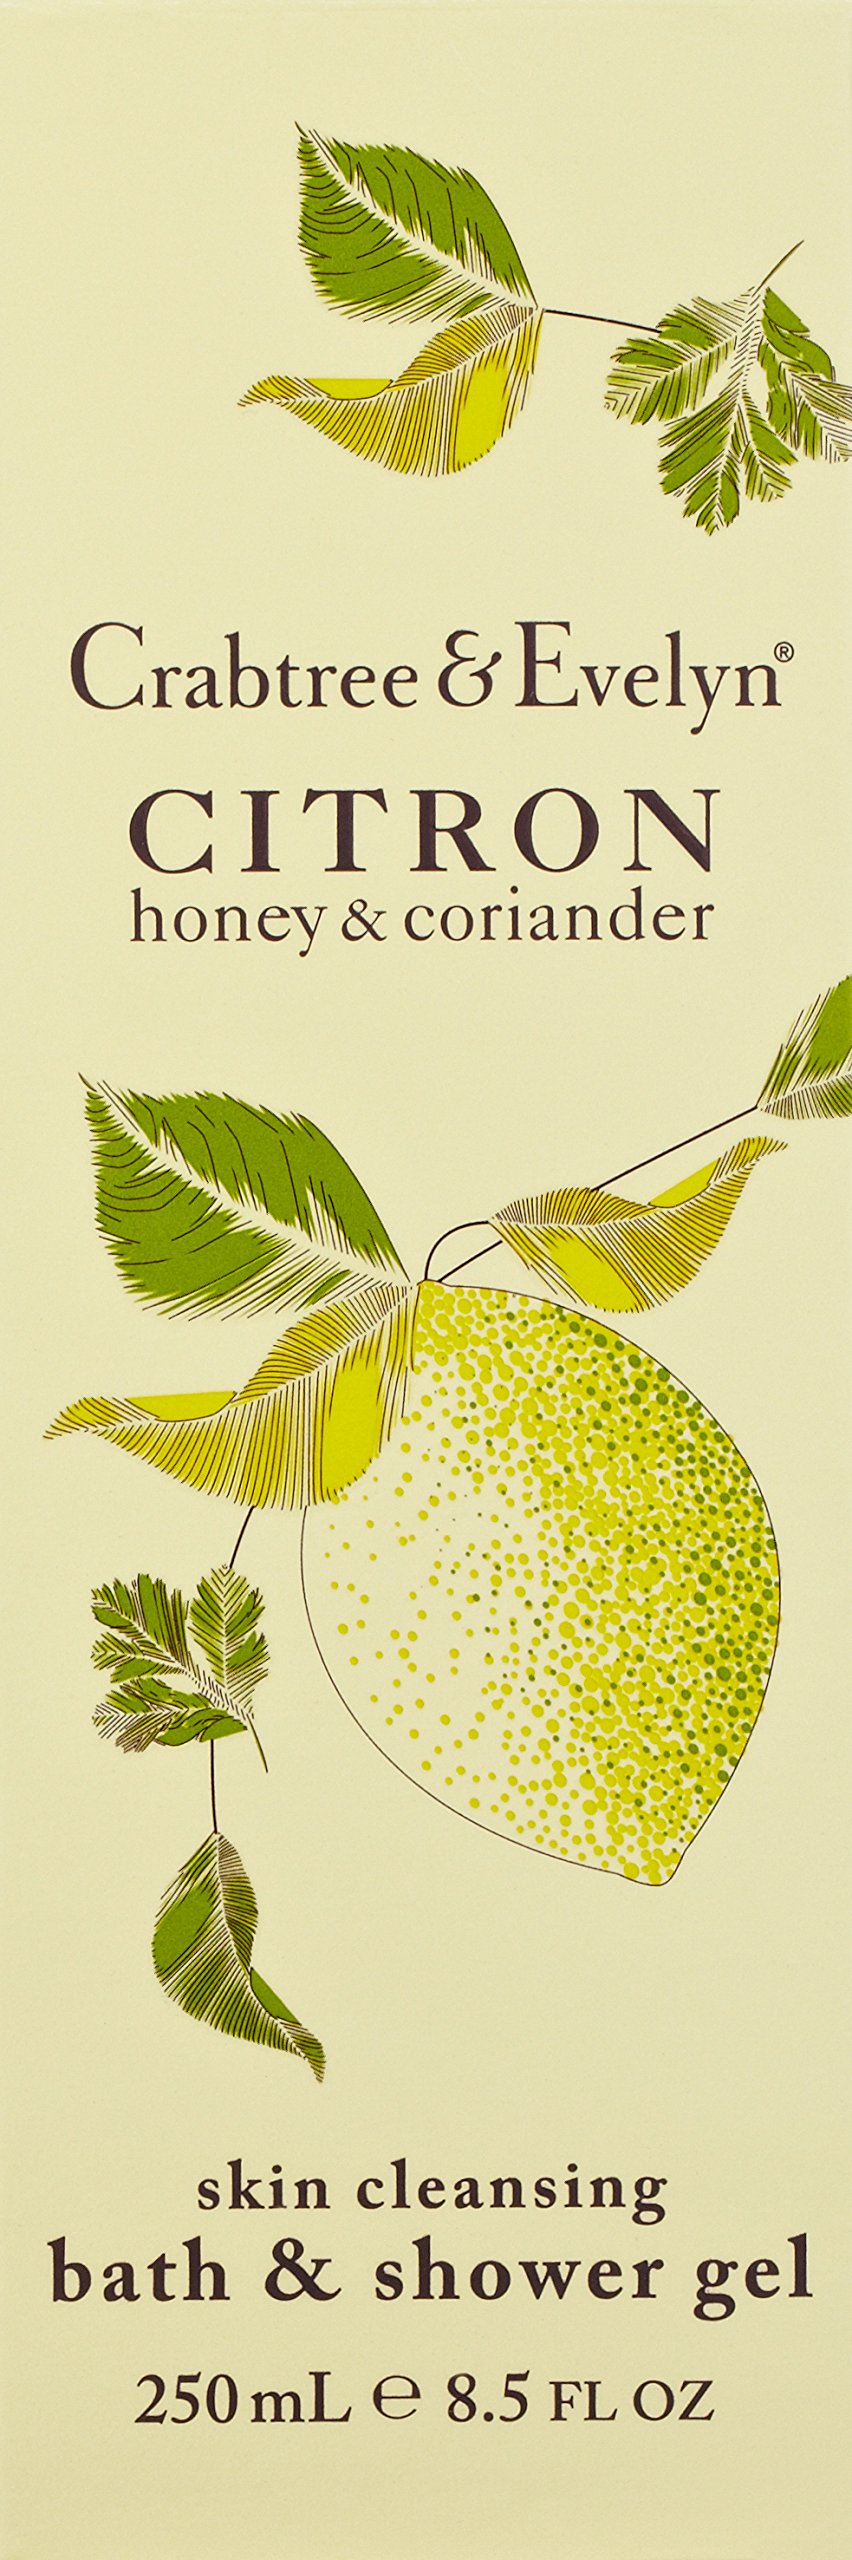 Crabtree & Evelyn Citron Honey & Coriander Bath and Shower Gel, 8.5 Fl Oz